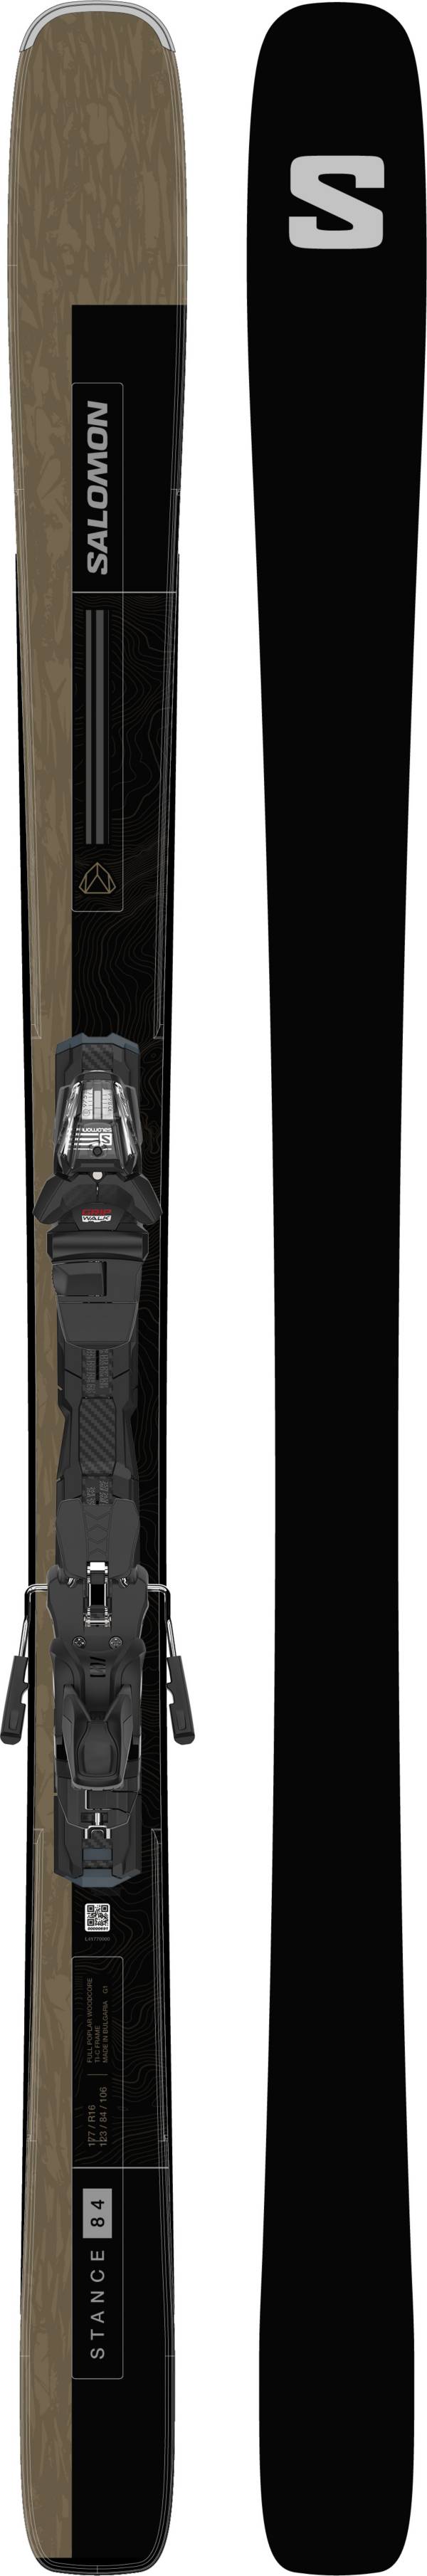 Salomon Stance 84 Skis and M12 GripWalk Ski Boot Binding product image